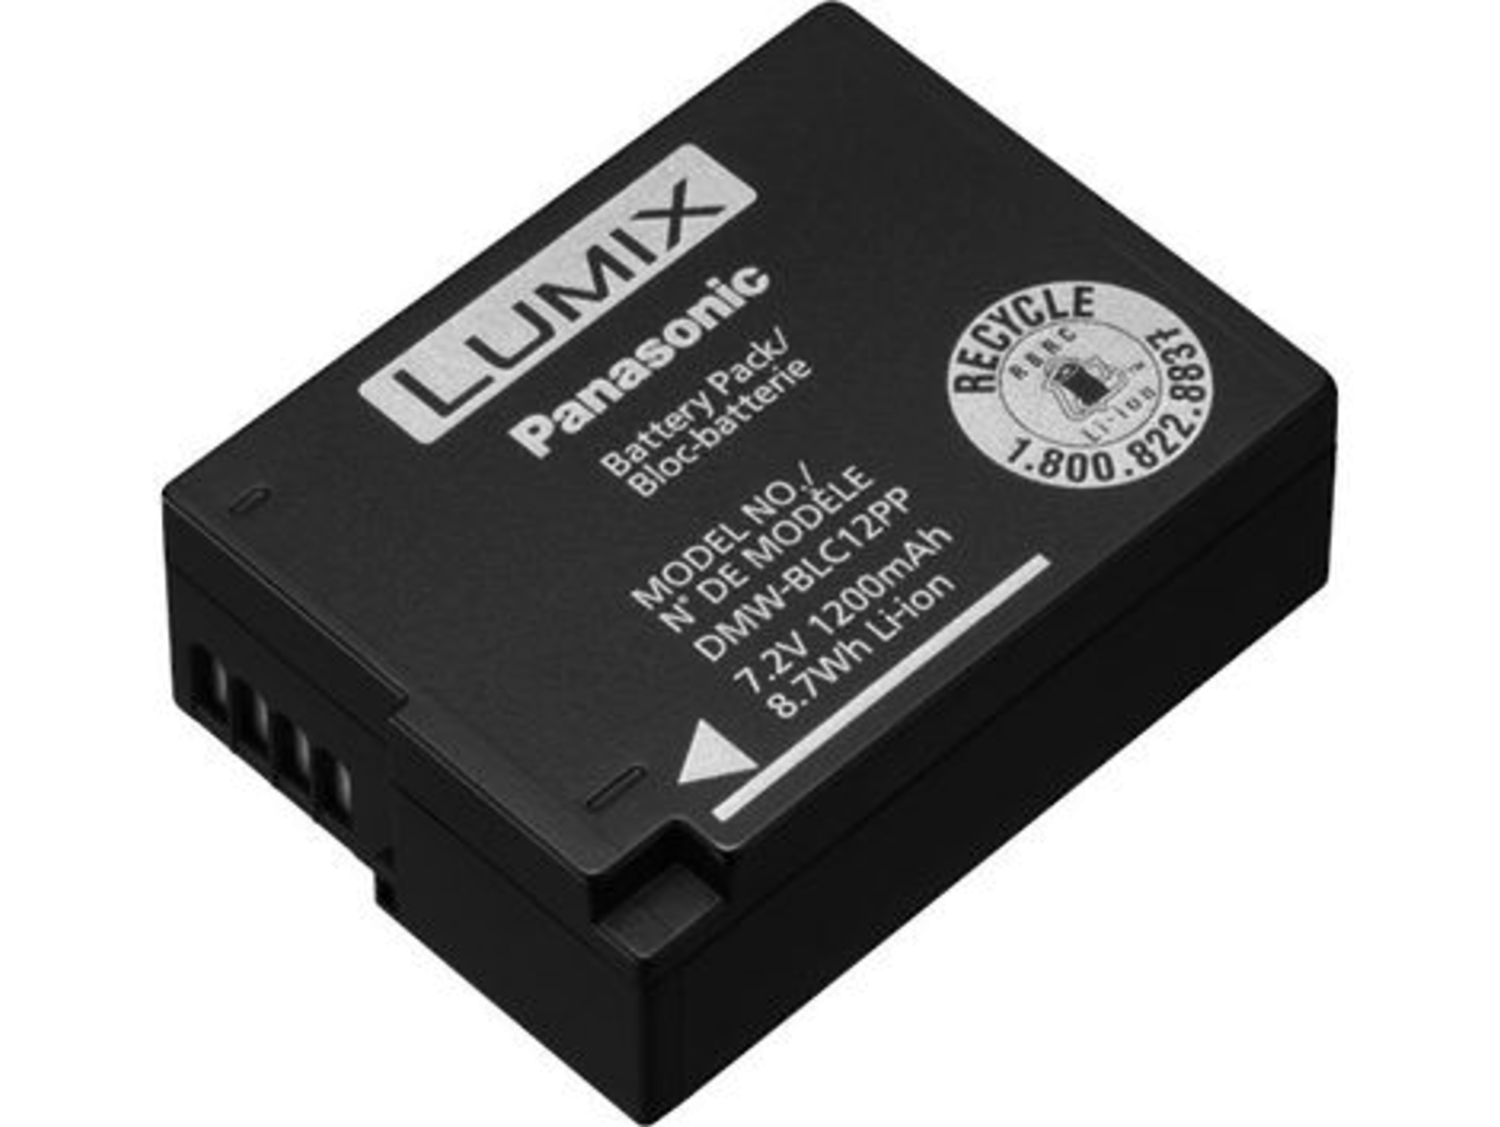 Panasonic Panasonic Lumix Battery Dmw Blc12 For Fz1000 Fz300 Looking Glass Photo